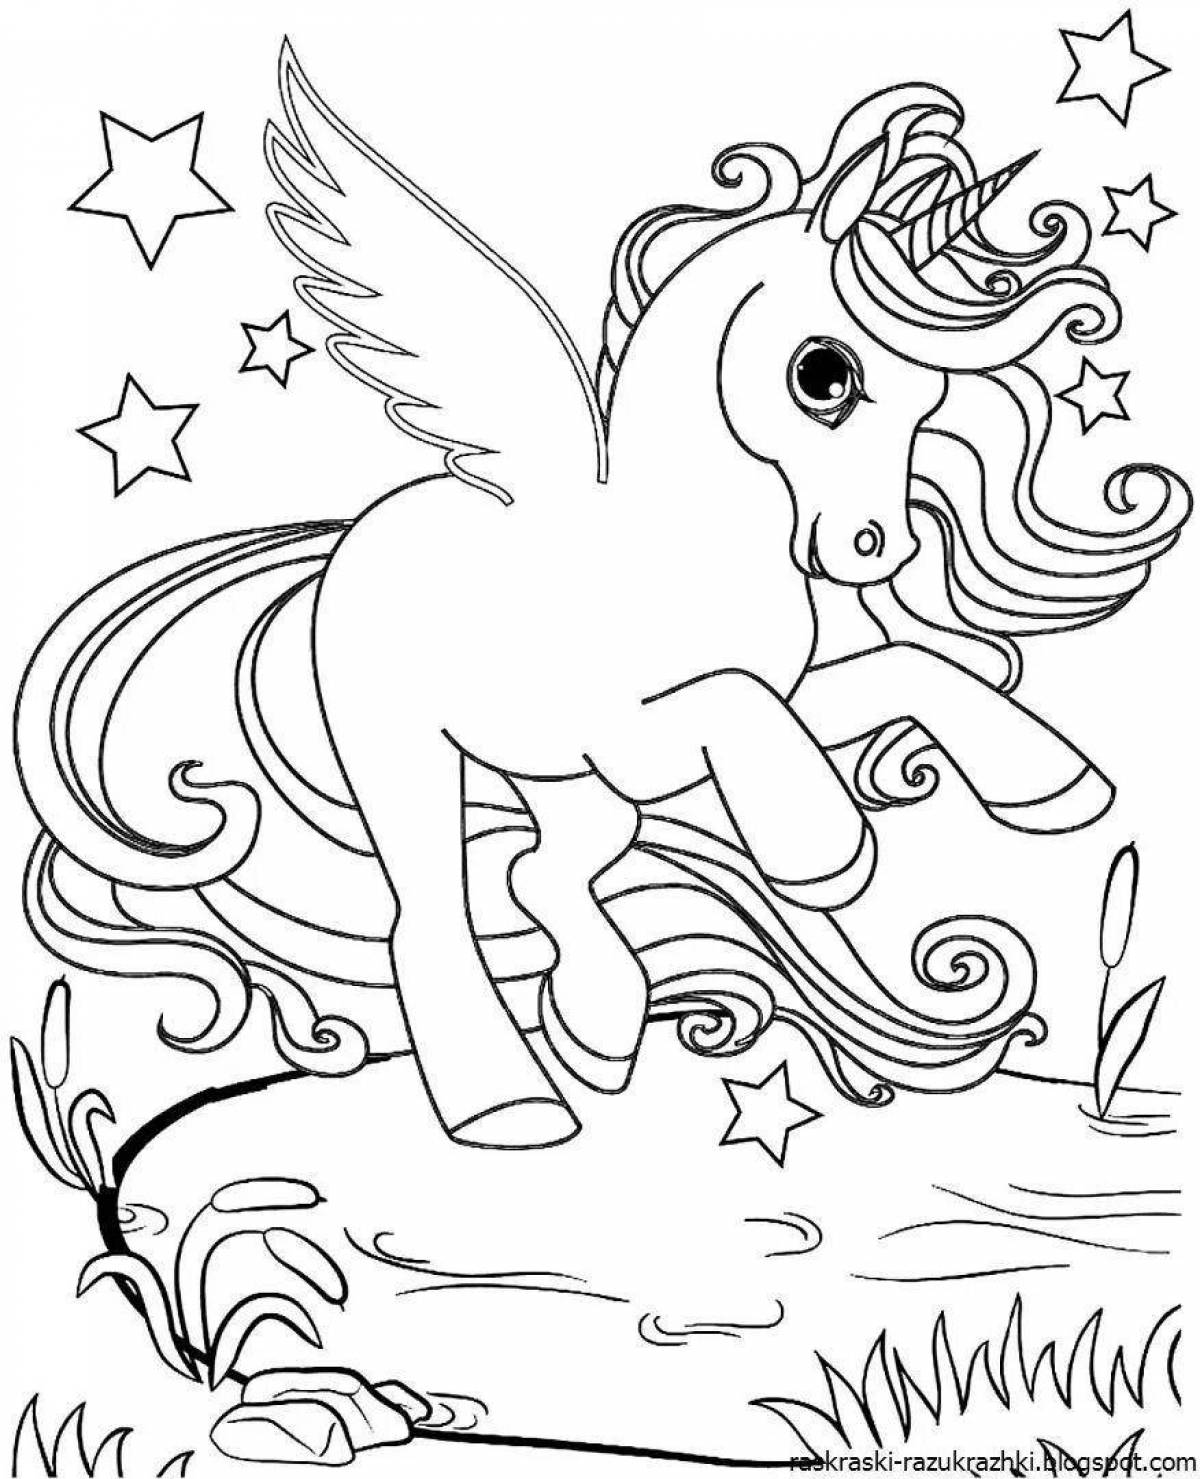 Joyful coloring for children 5-6 years old for girls unicorns